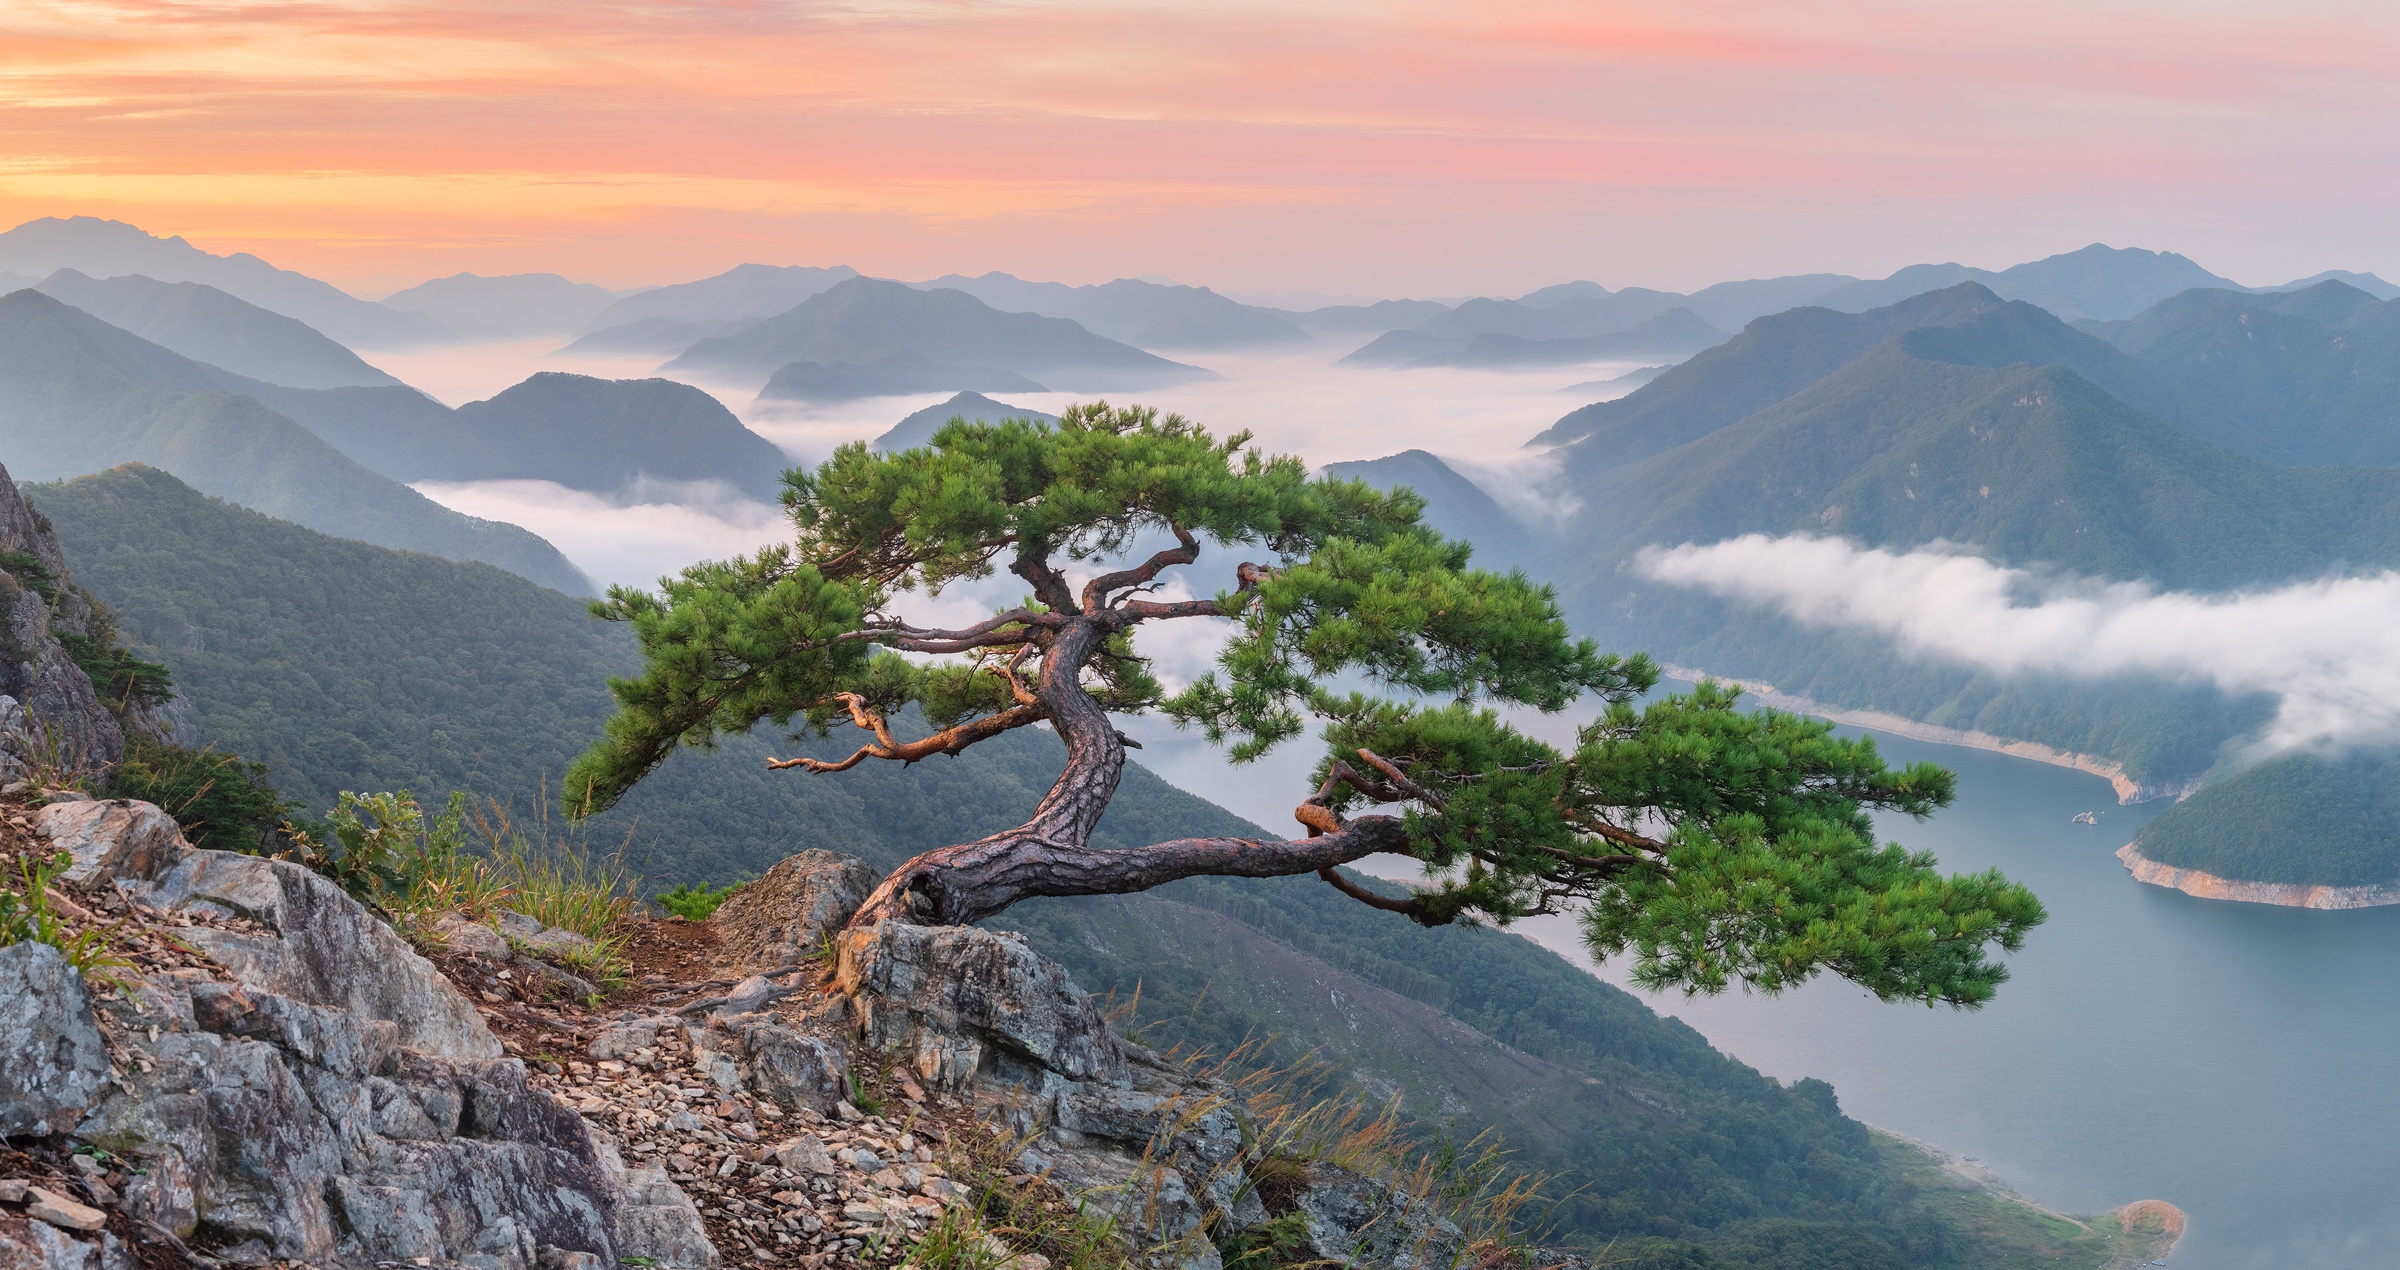 Hd desktop landscape nature trees mountain tree fog earth river south korea download free picture